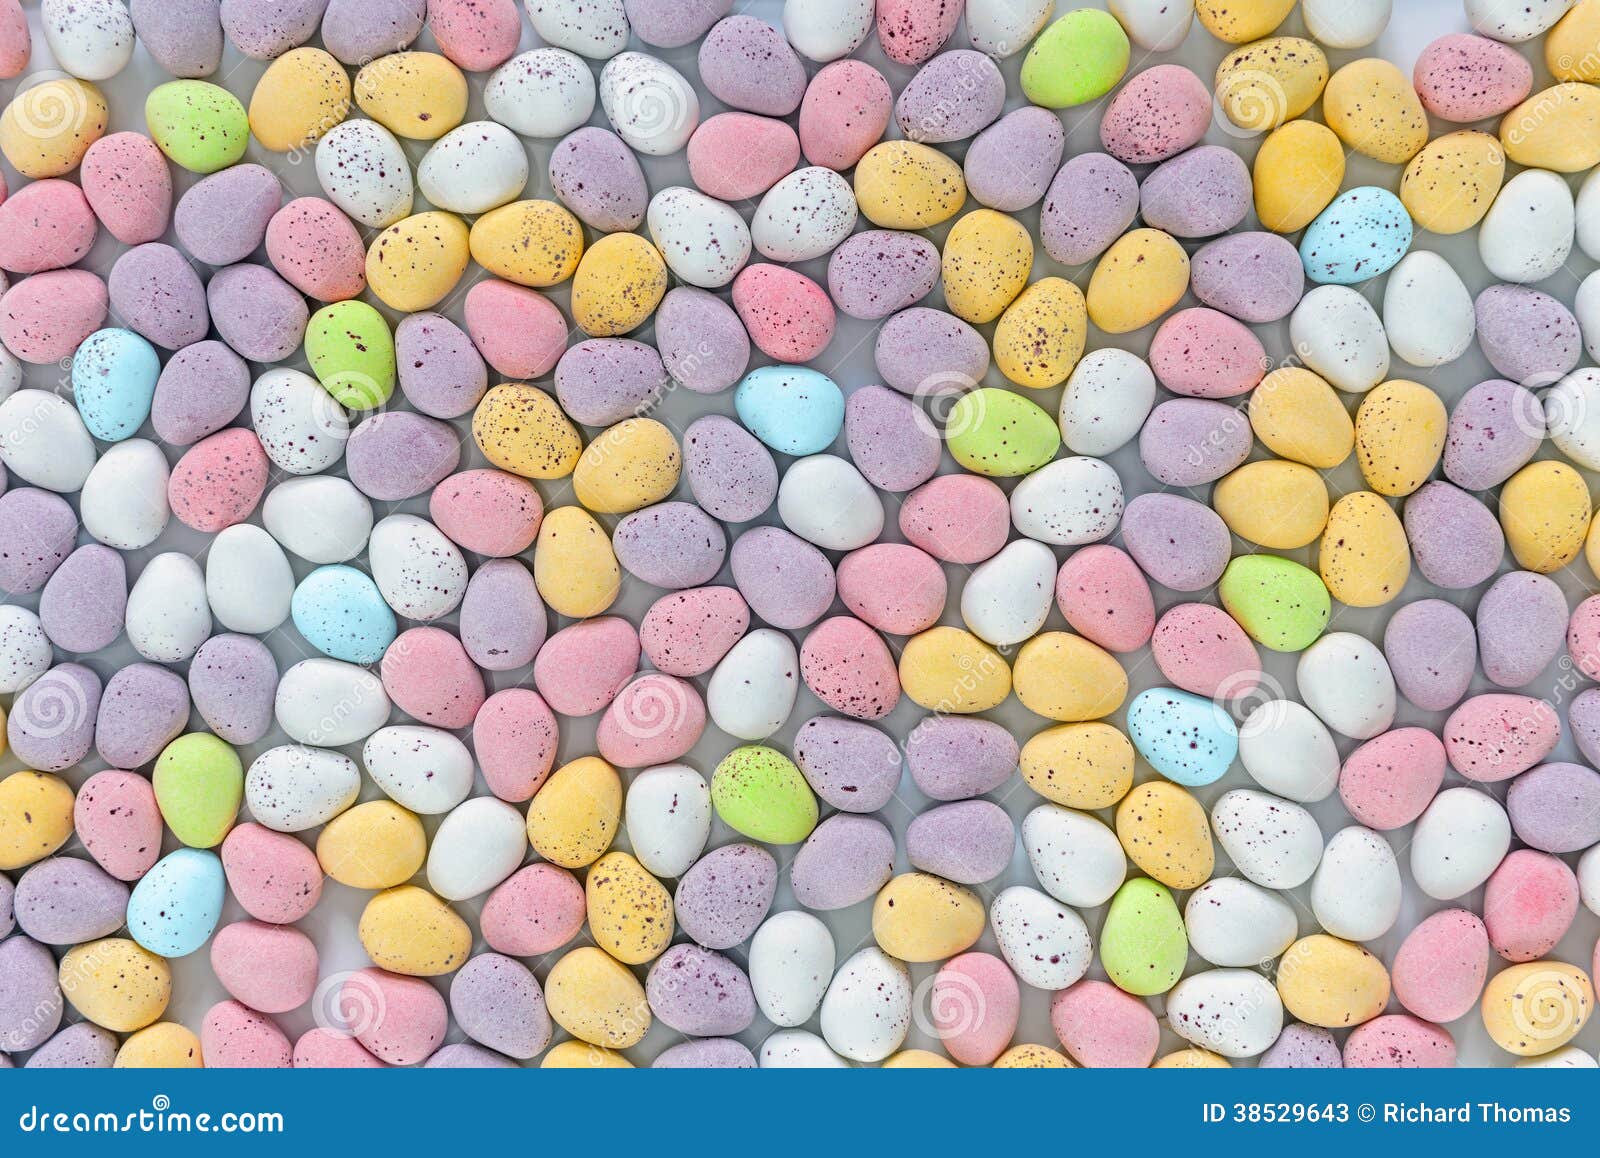 Mini Chcocolate Easter Eggs Stock Image - Image: 38529643